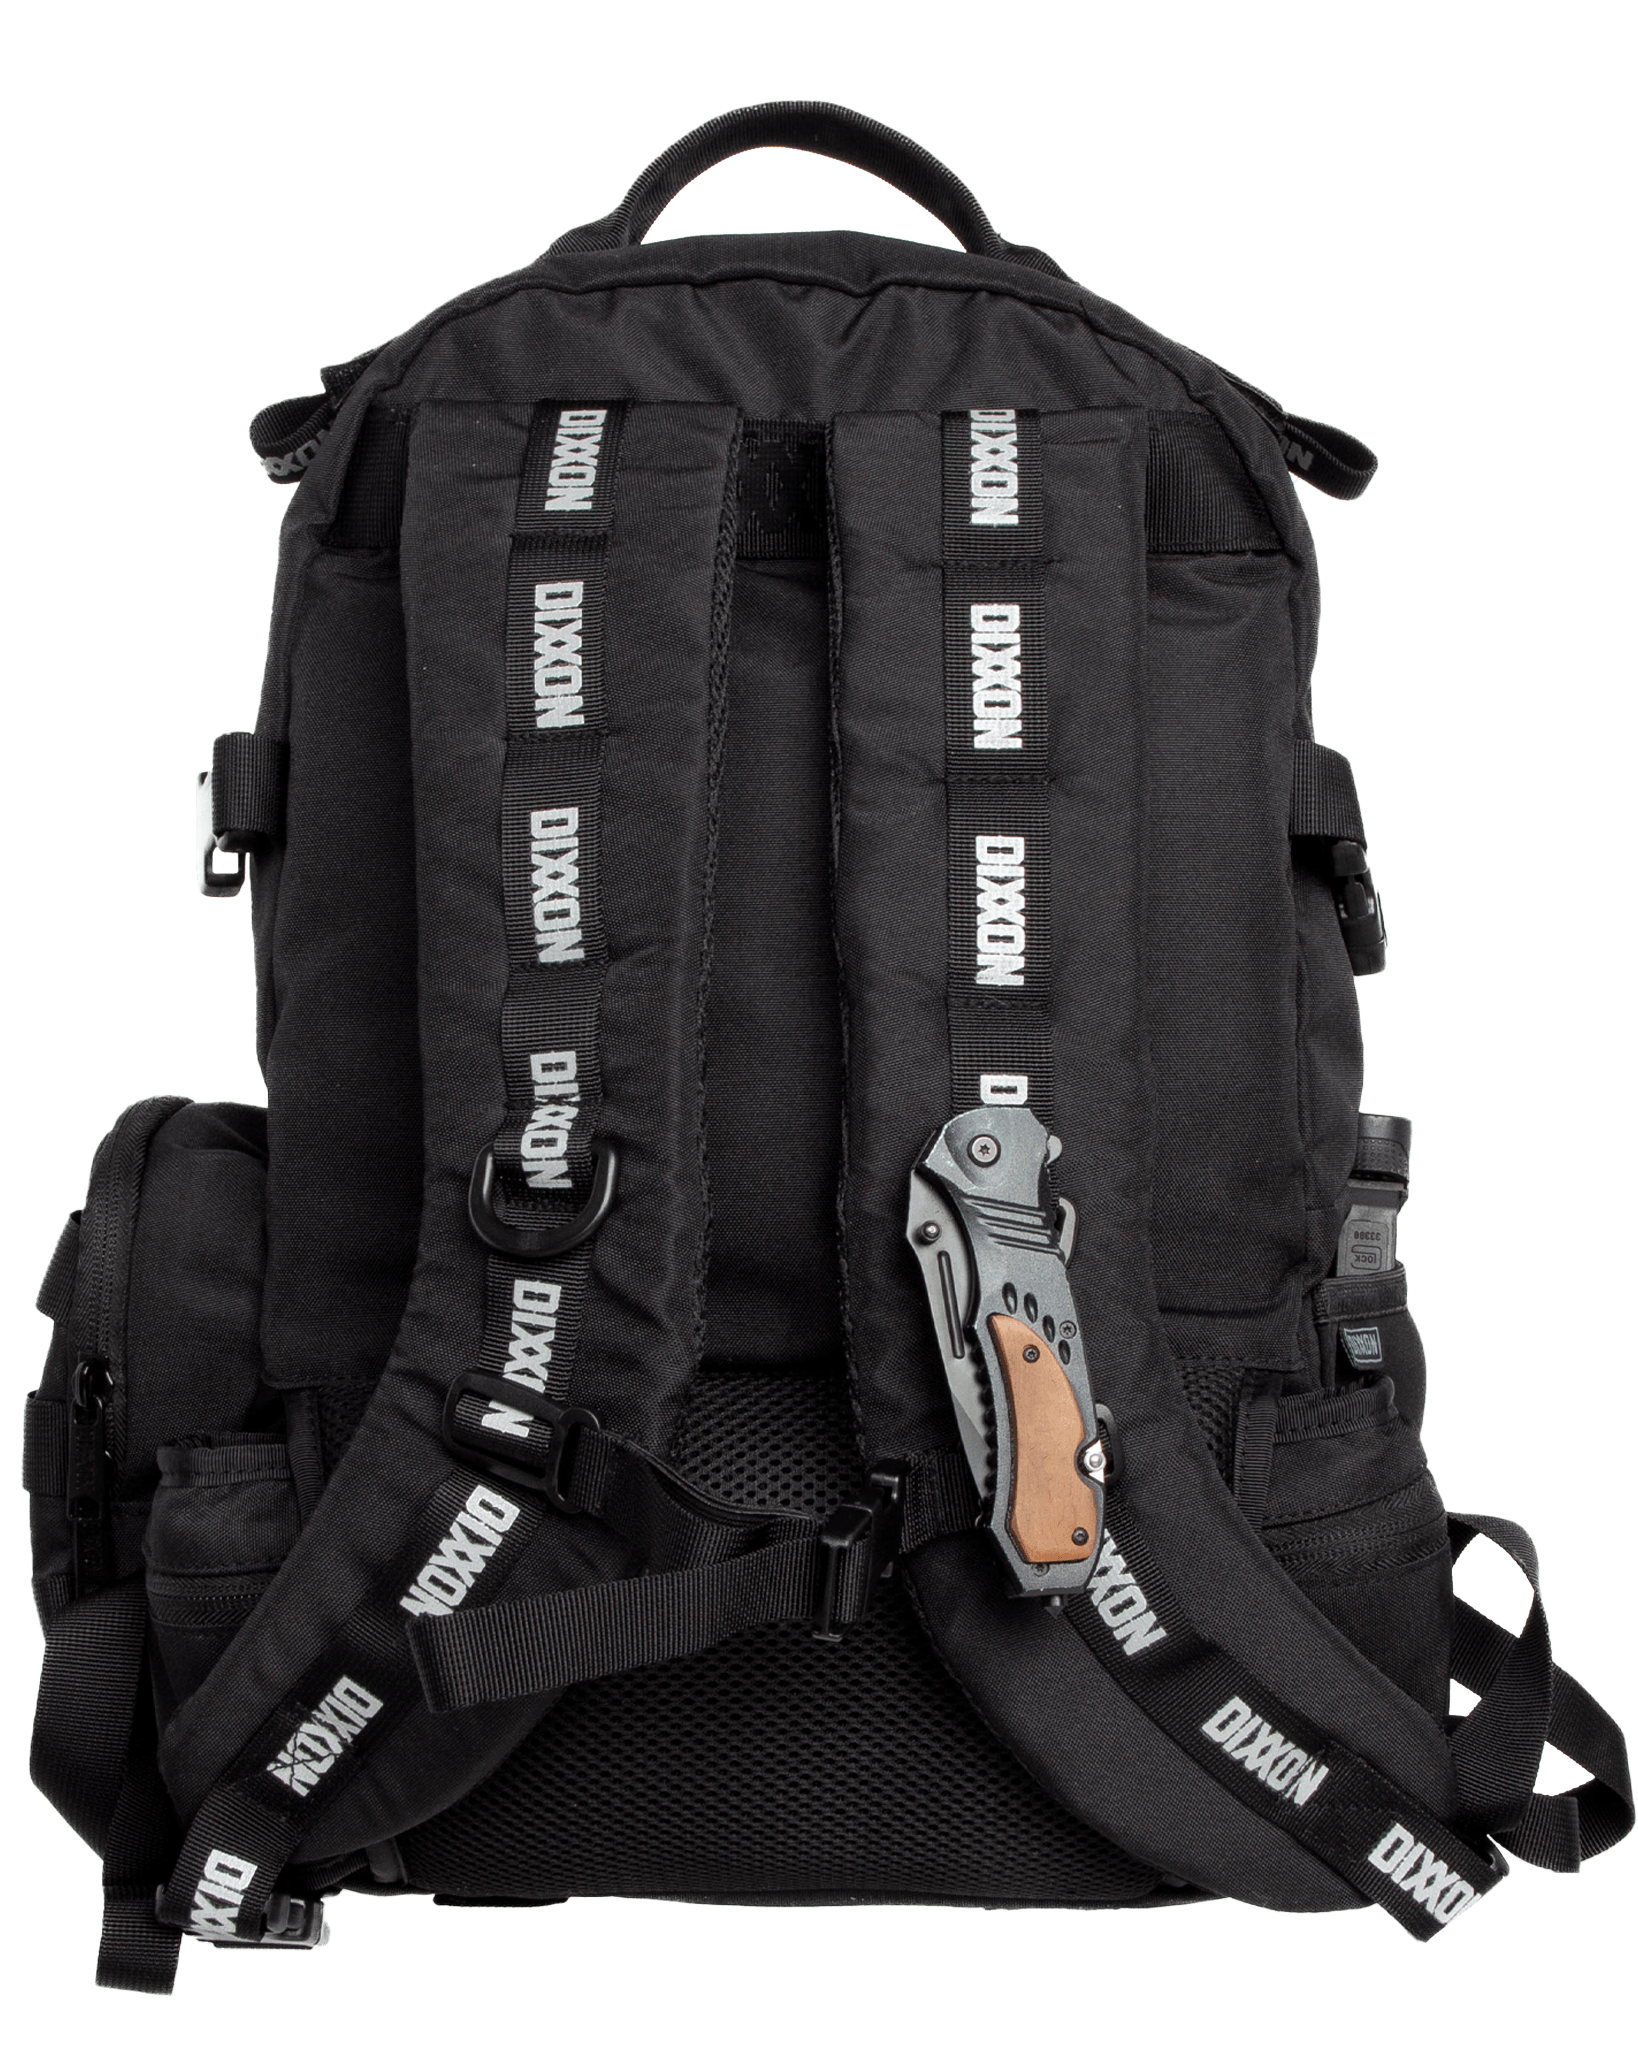 Tactical Backpack - Black - Dixxon Flannel Co.